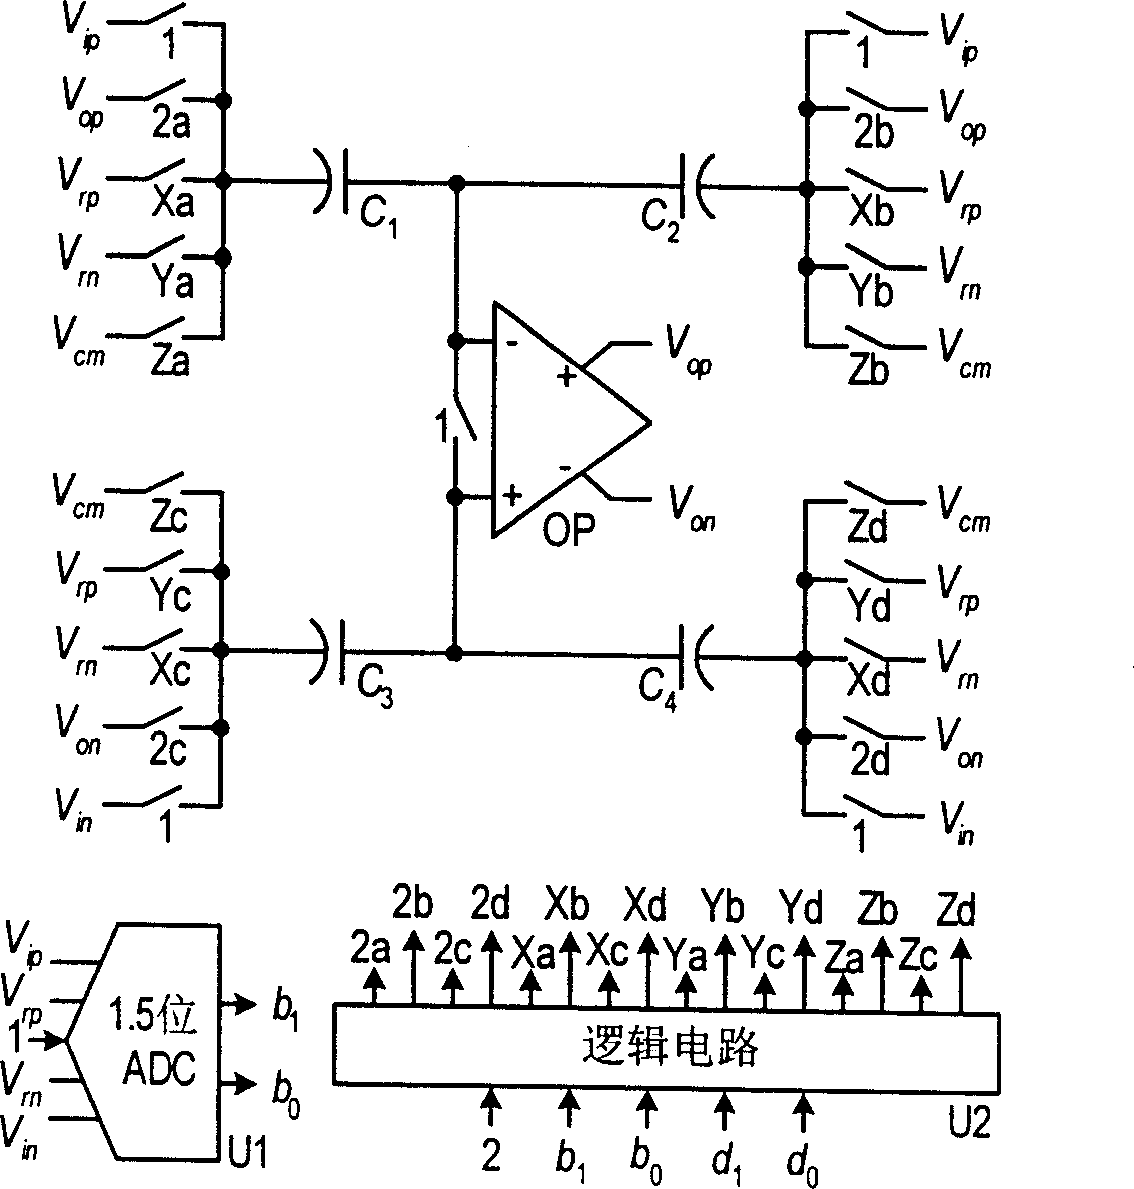 Method for reducing analog-digital converter capacitance mismatch error based on capacitance match